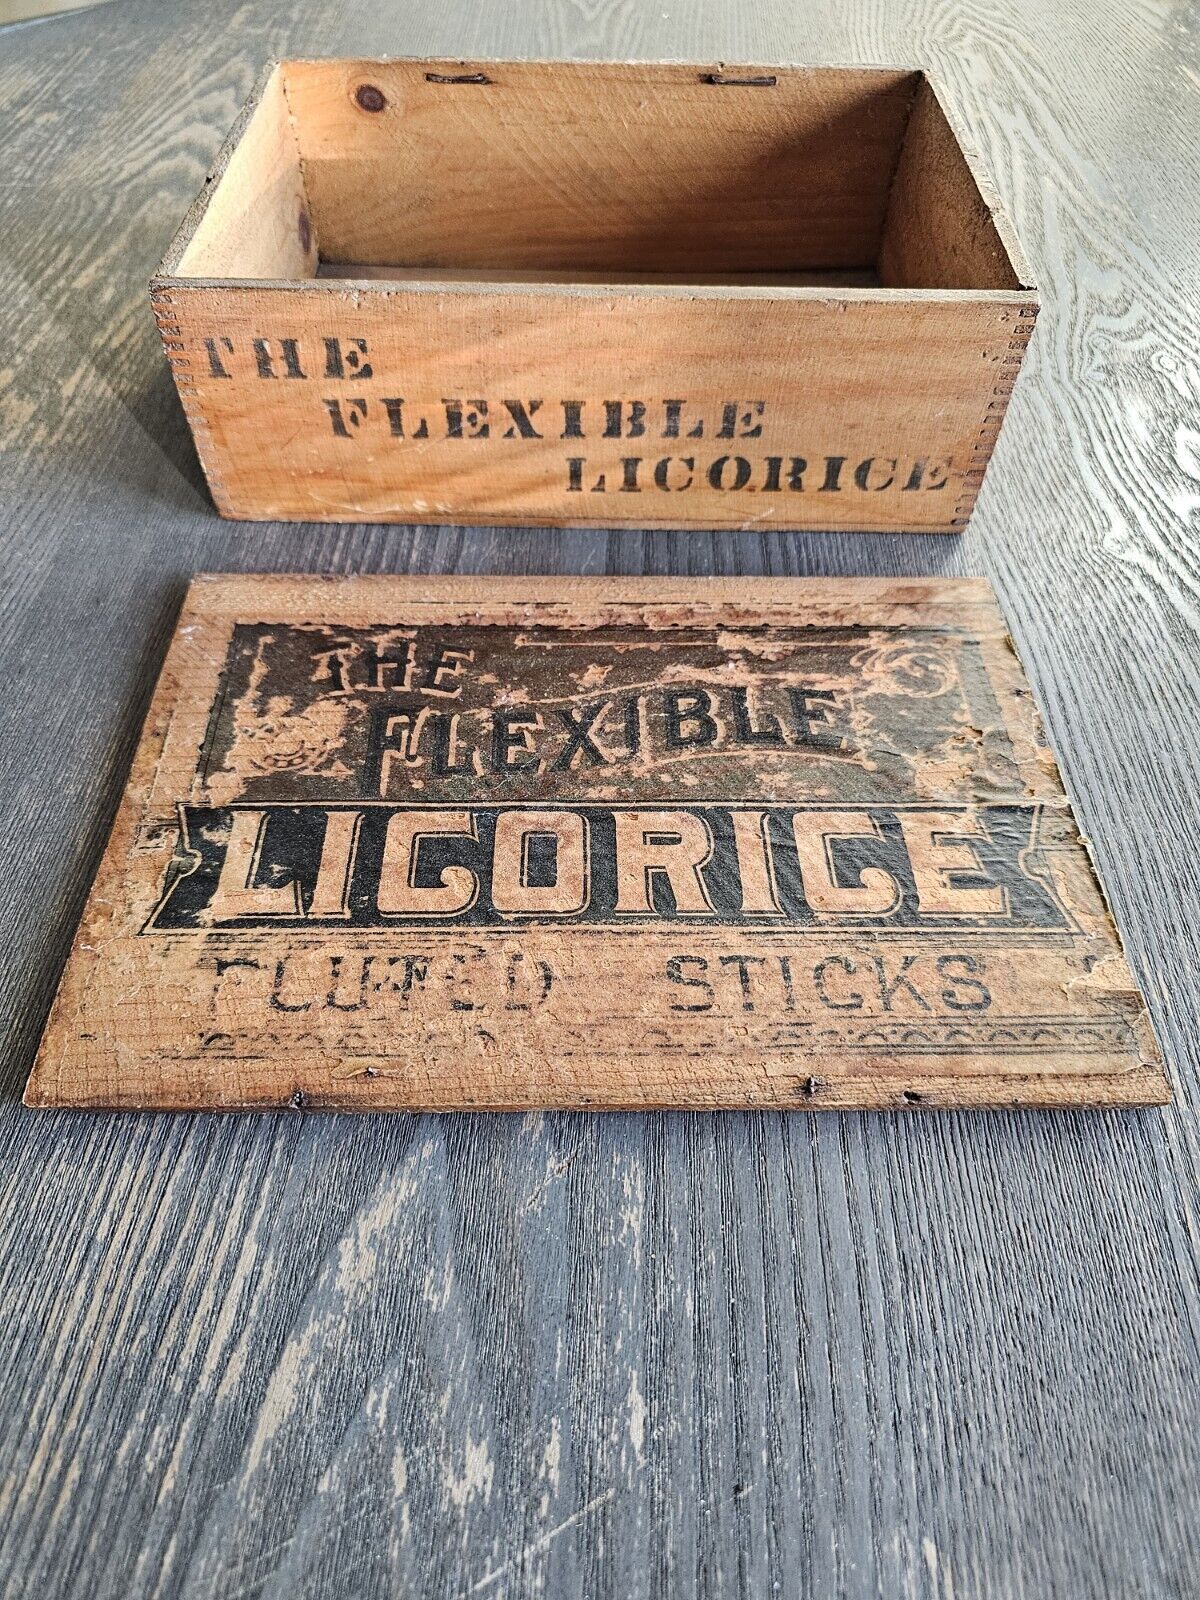 RARE VTG / Antique LICORICE Box Hare & Hound Flexible Licorice Fluted Licorice 